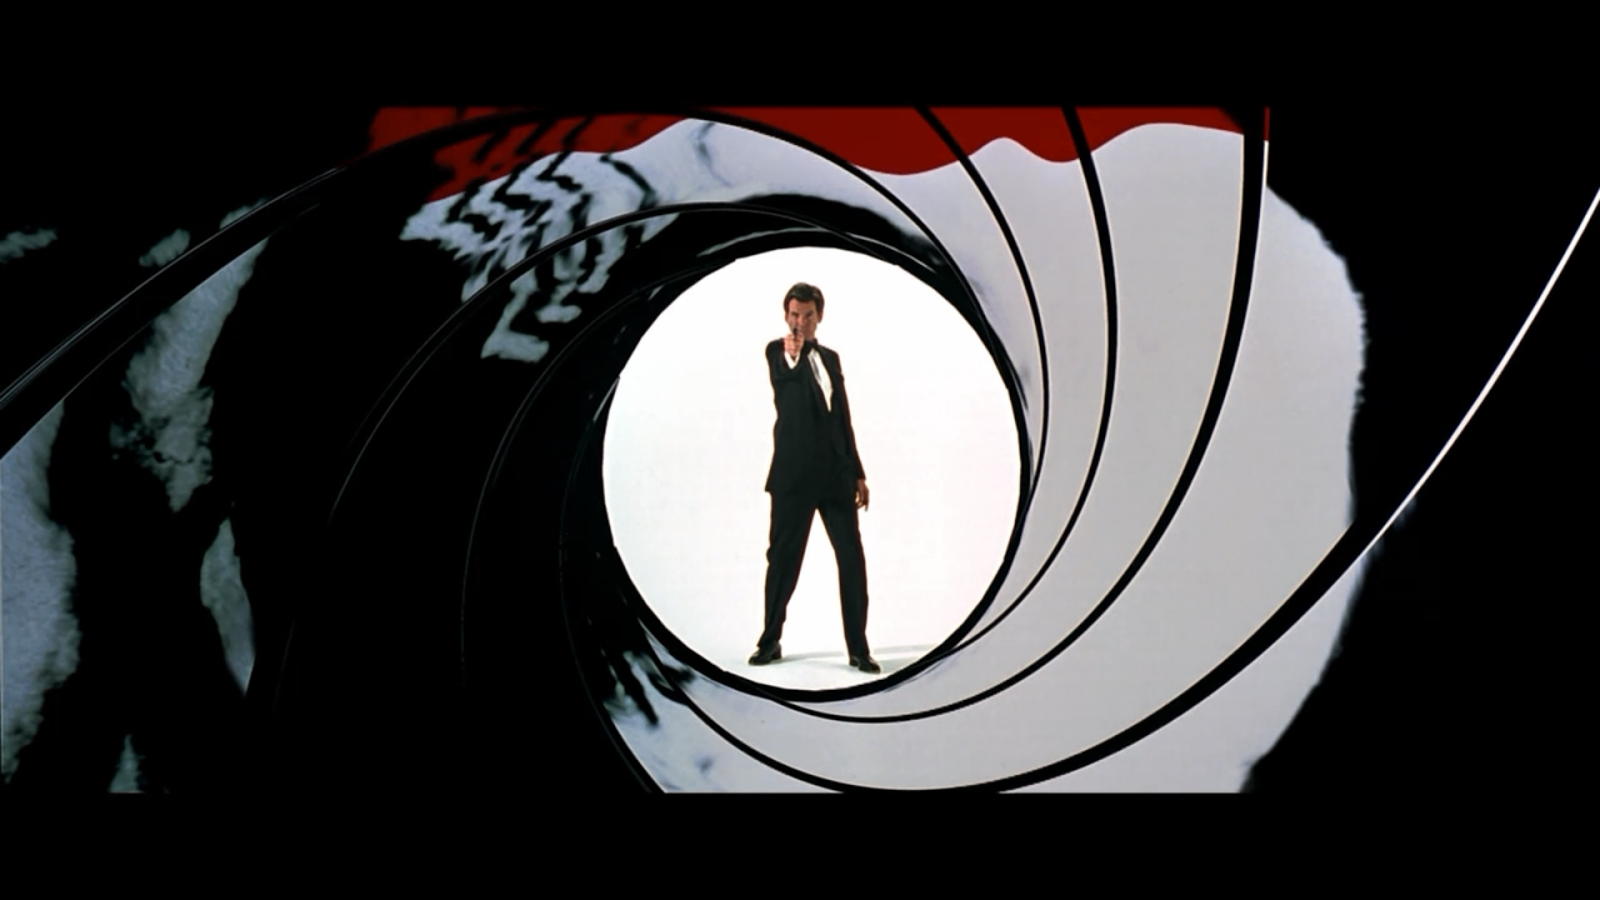 James Bond, GoldenEye Wiki